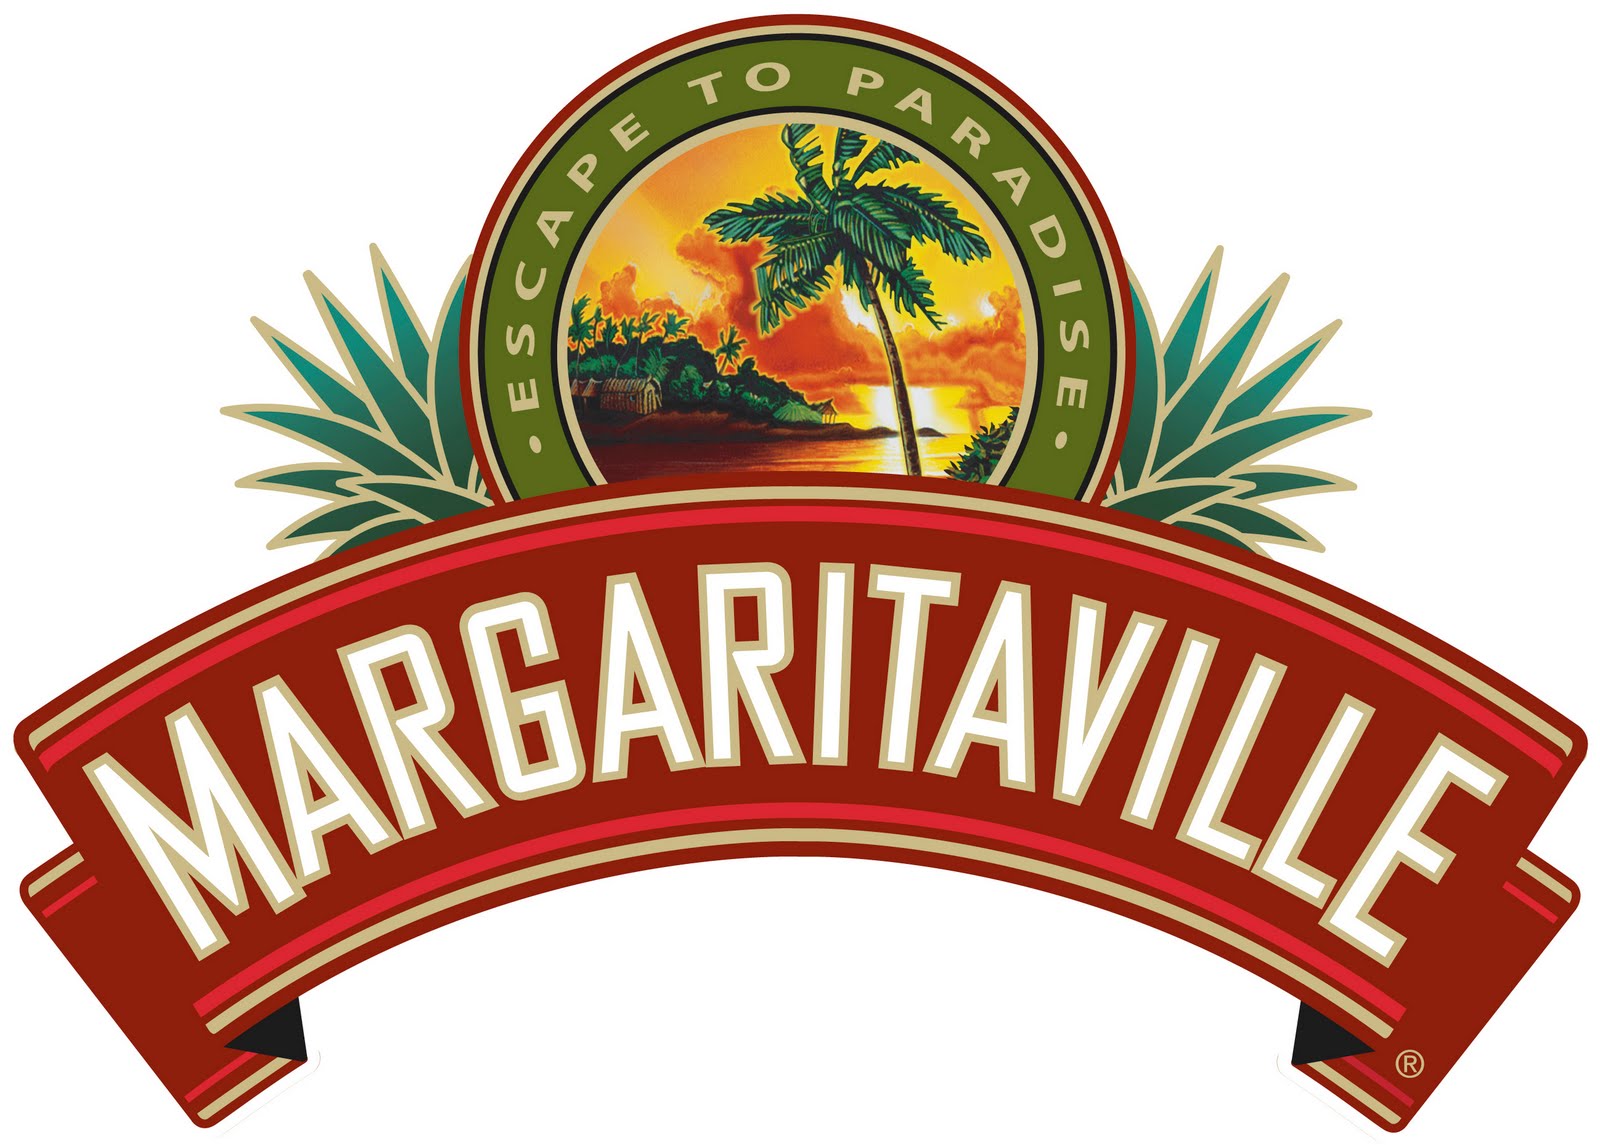 Margaritaville Logos